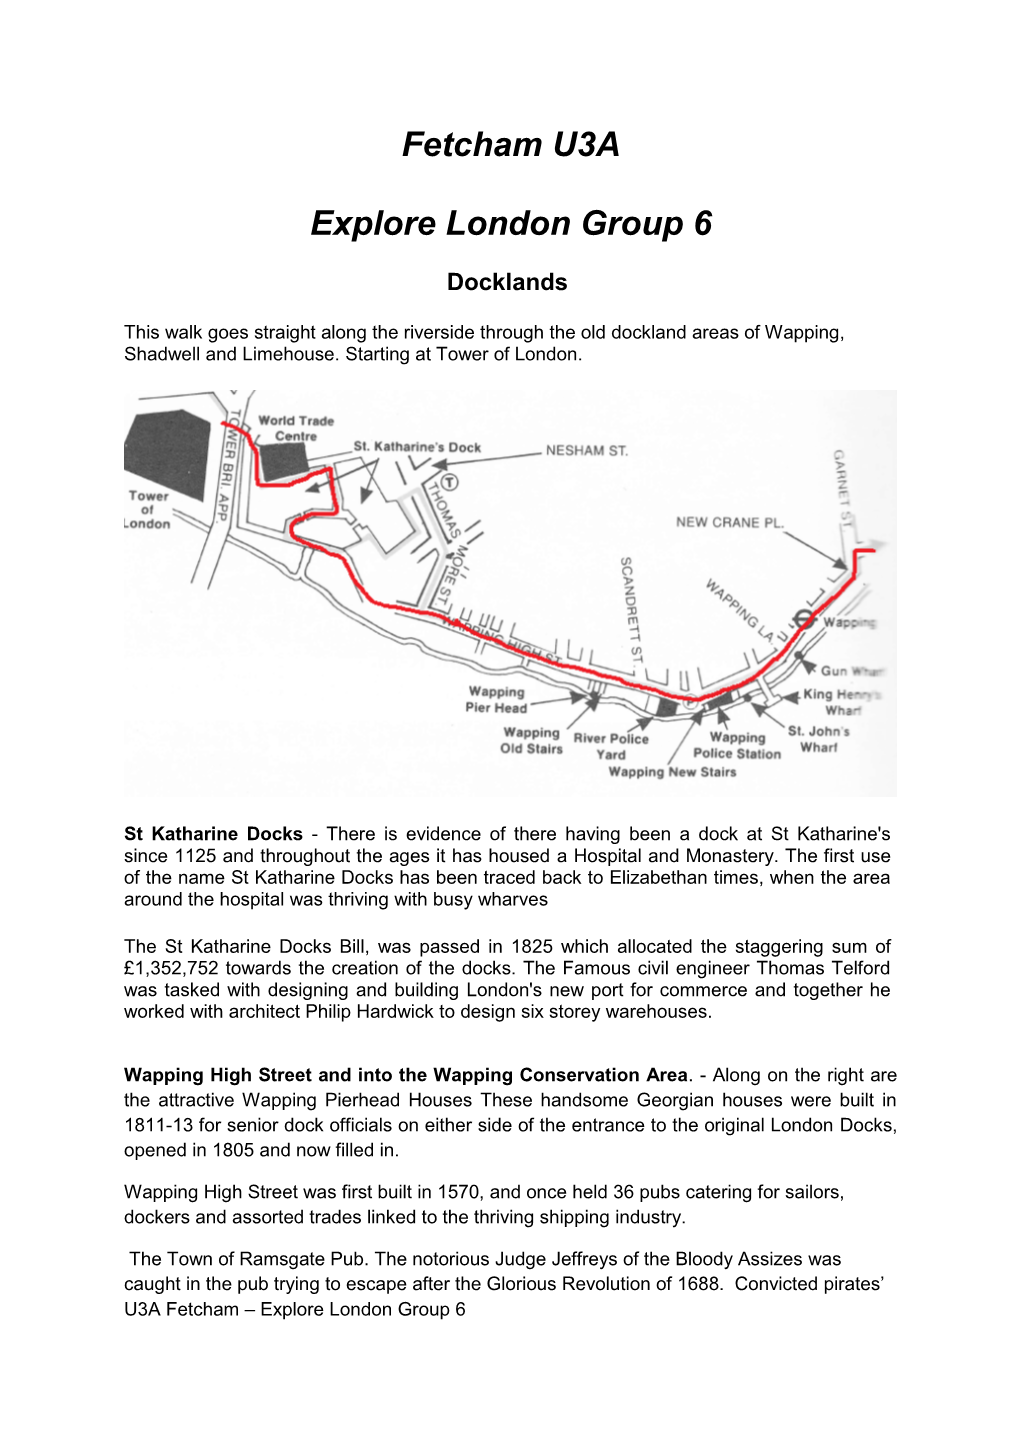 Fetcham U3A Explore London Group 6